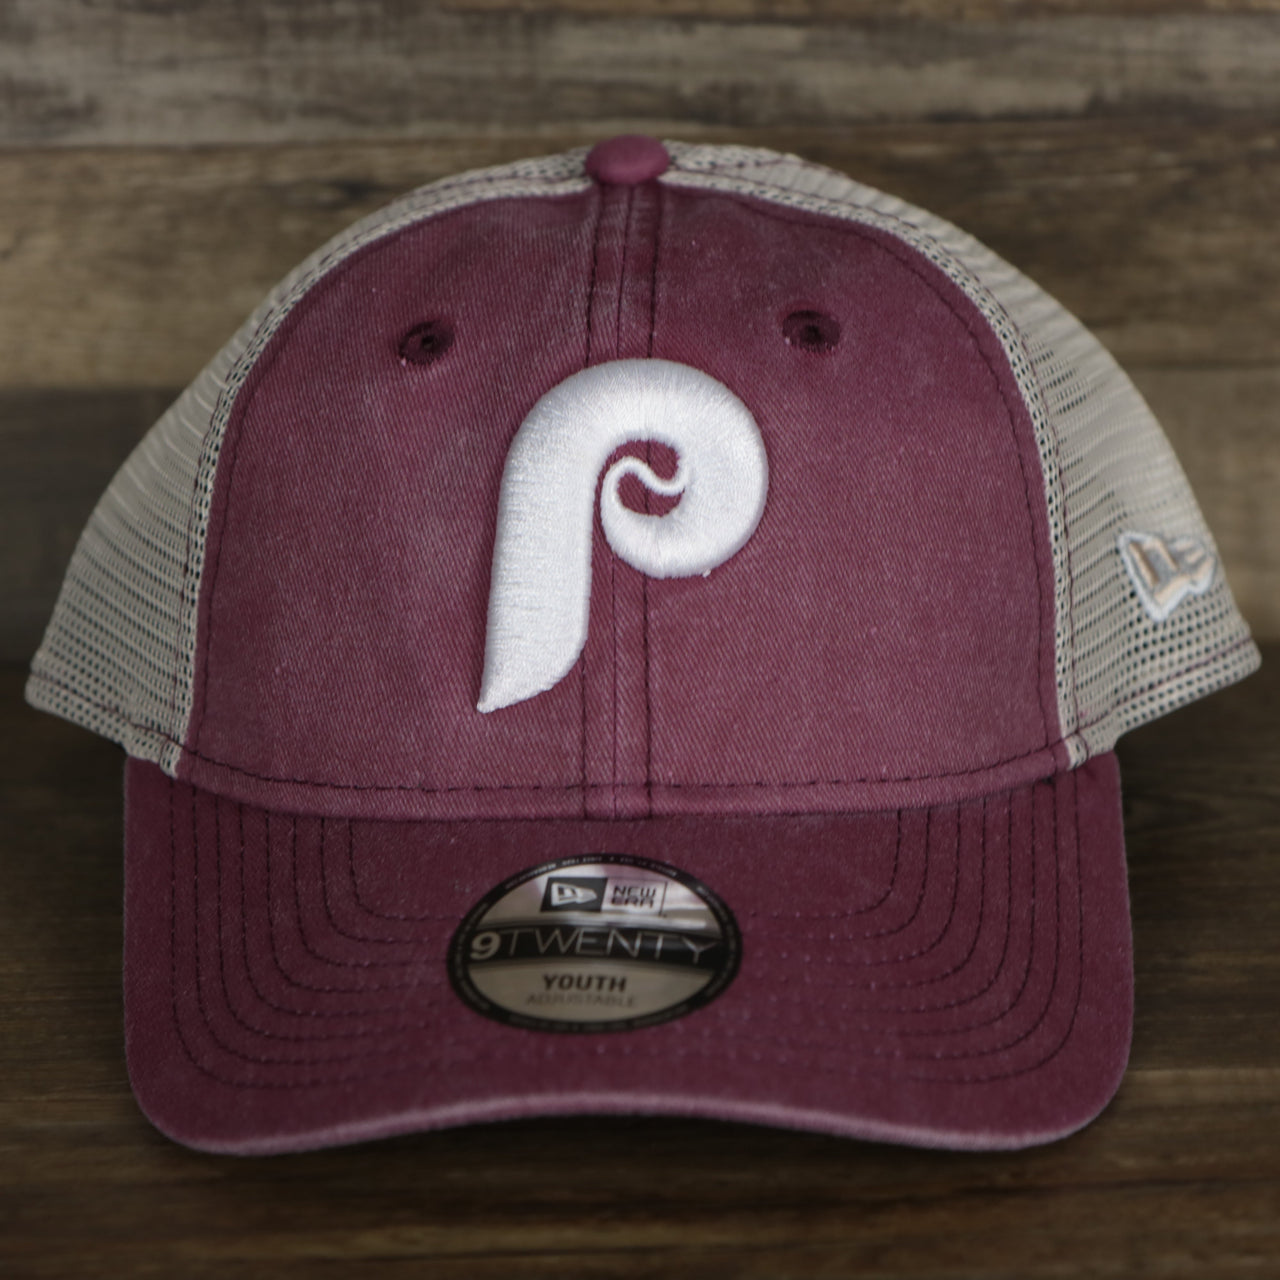 The Philadelphia Phillies Cooperstown New Era 9Twenty Washed Trucker Youth hat